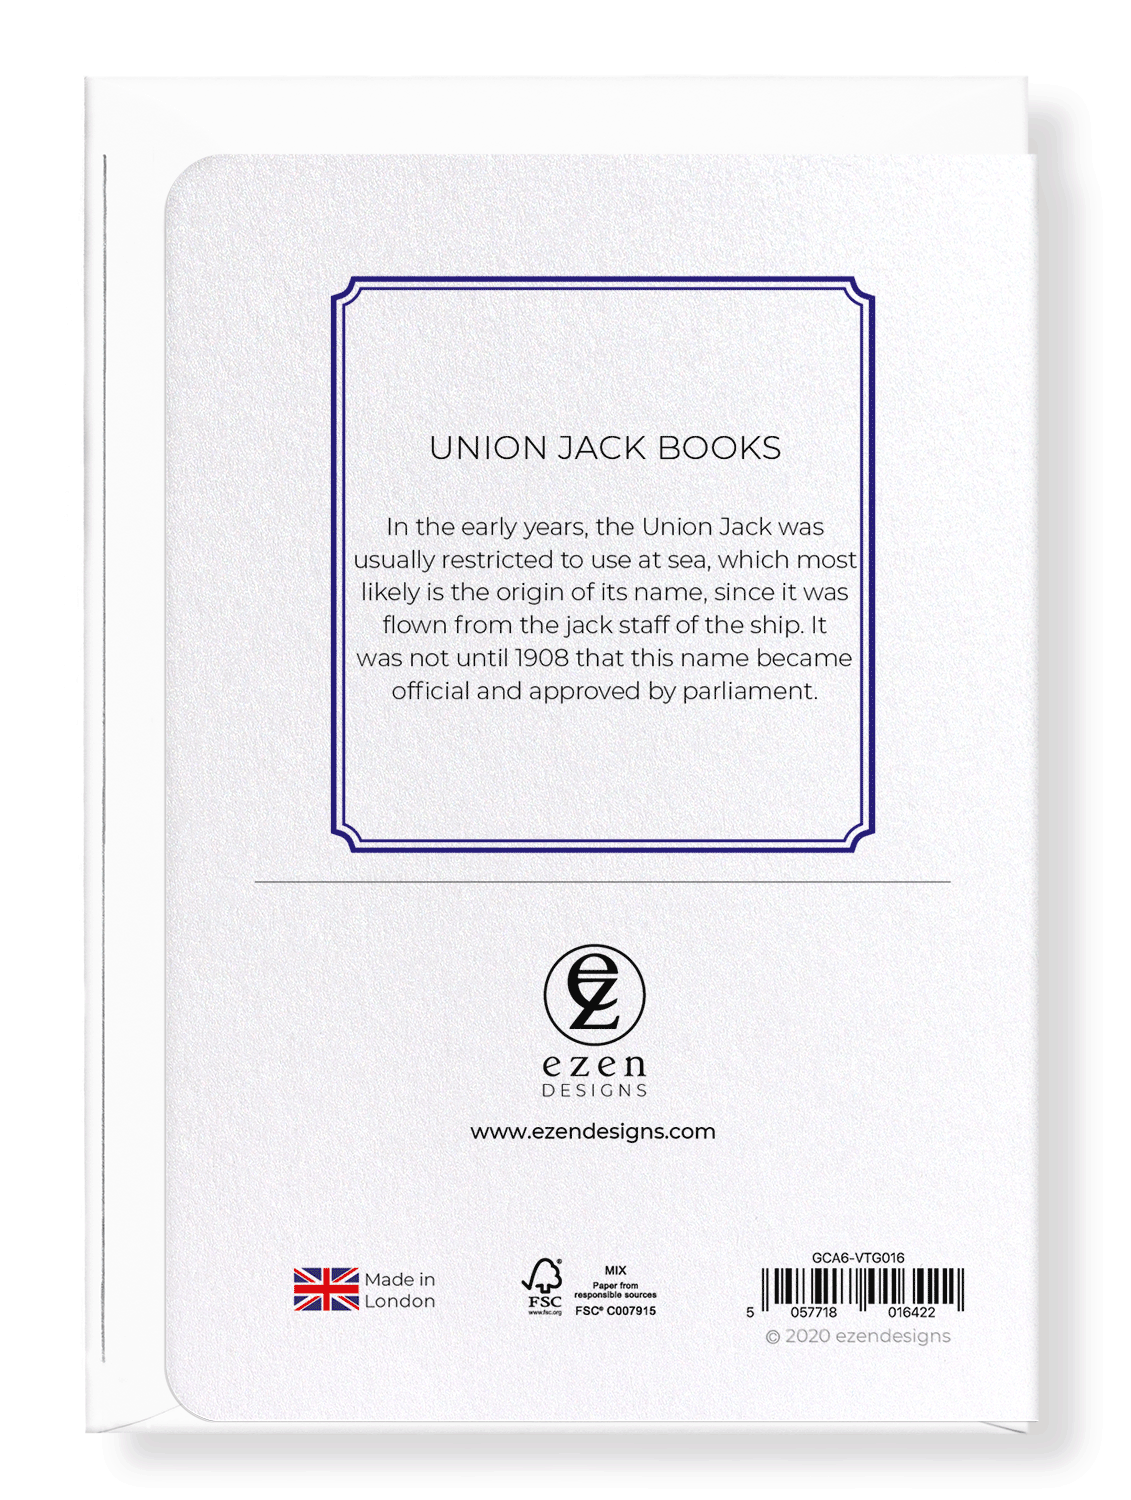 Ezen Designs - Union jack books - Greeting Card - Back